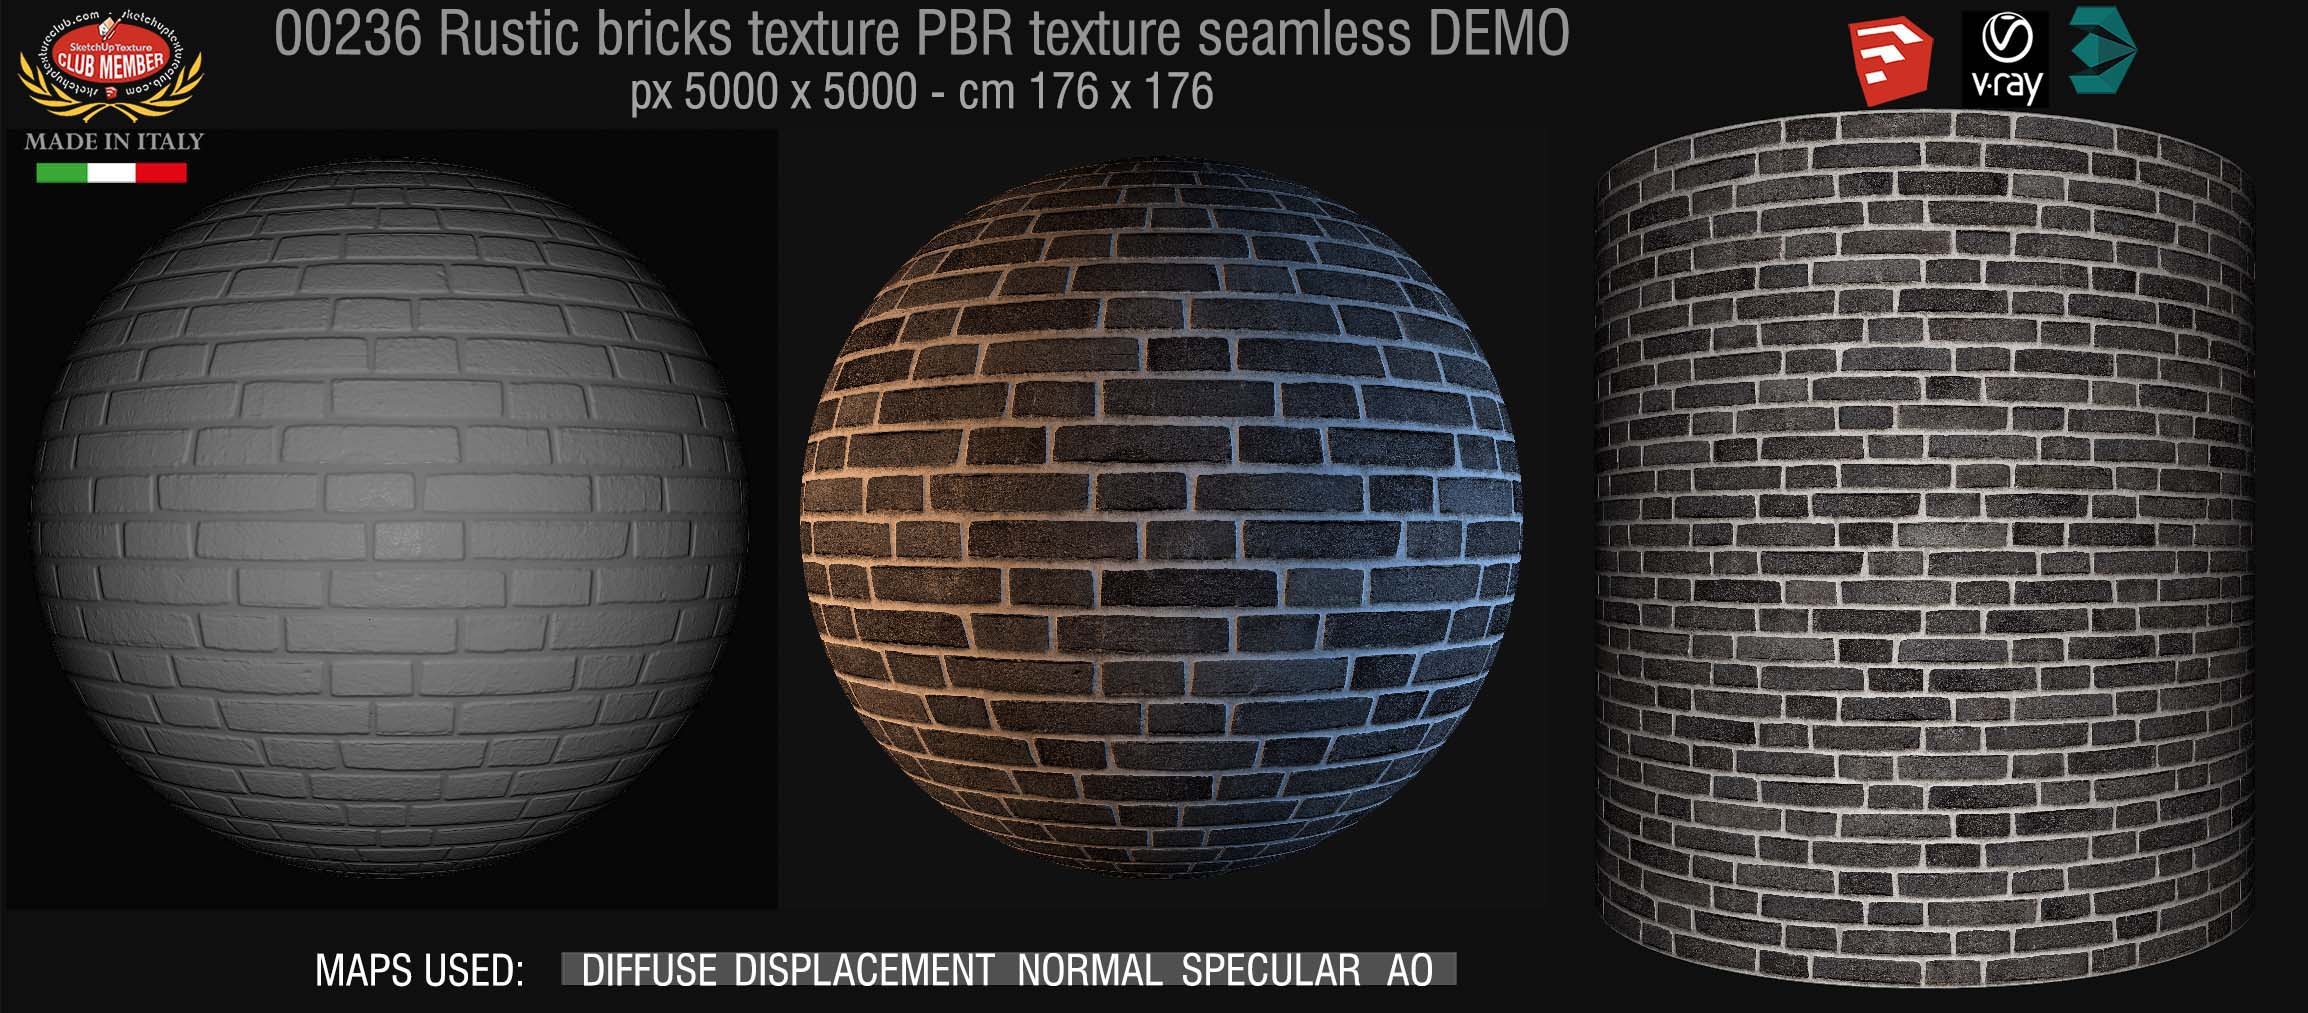 00236 rustic bricks PBR texture seamless DEMO